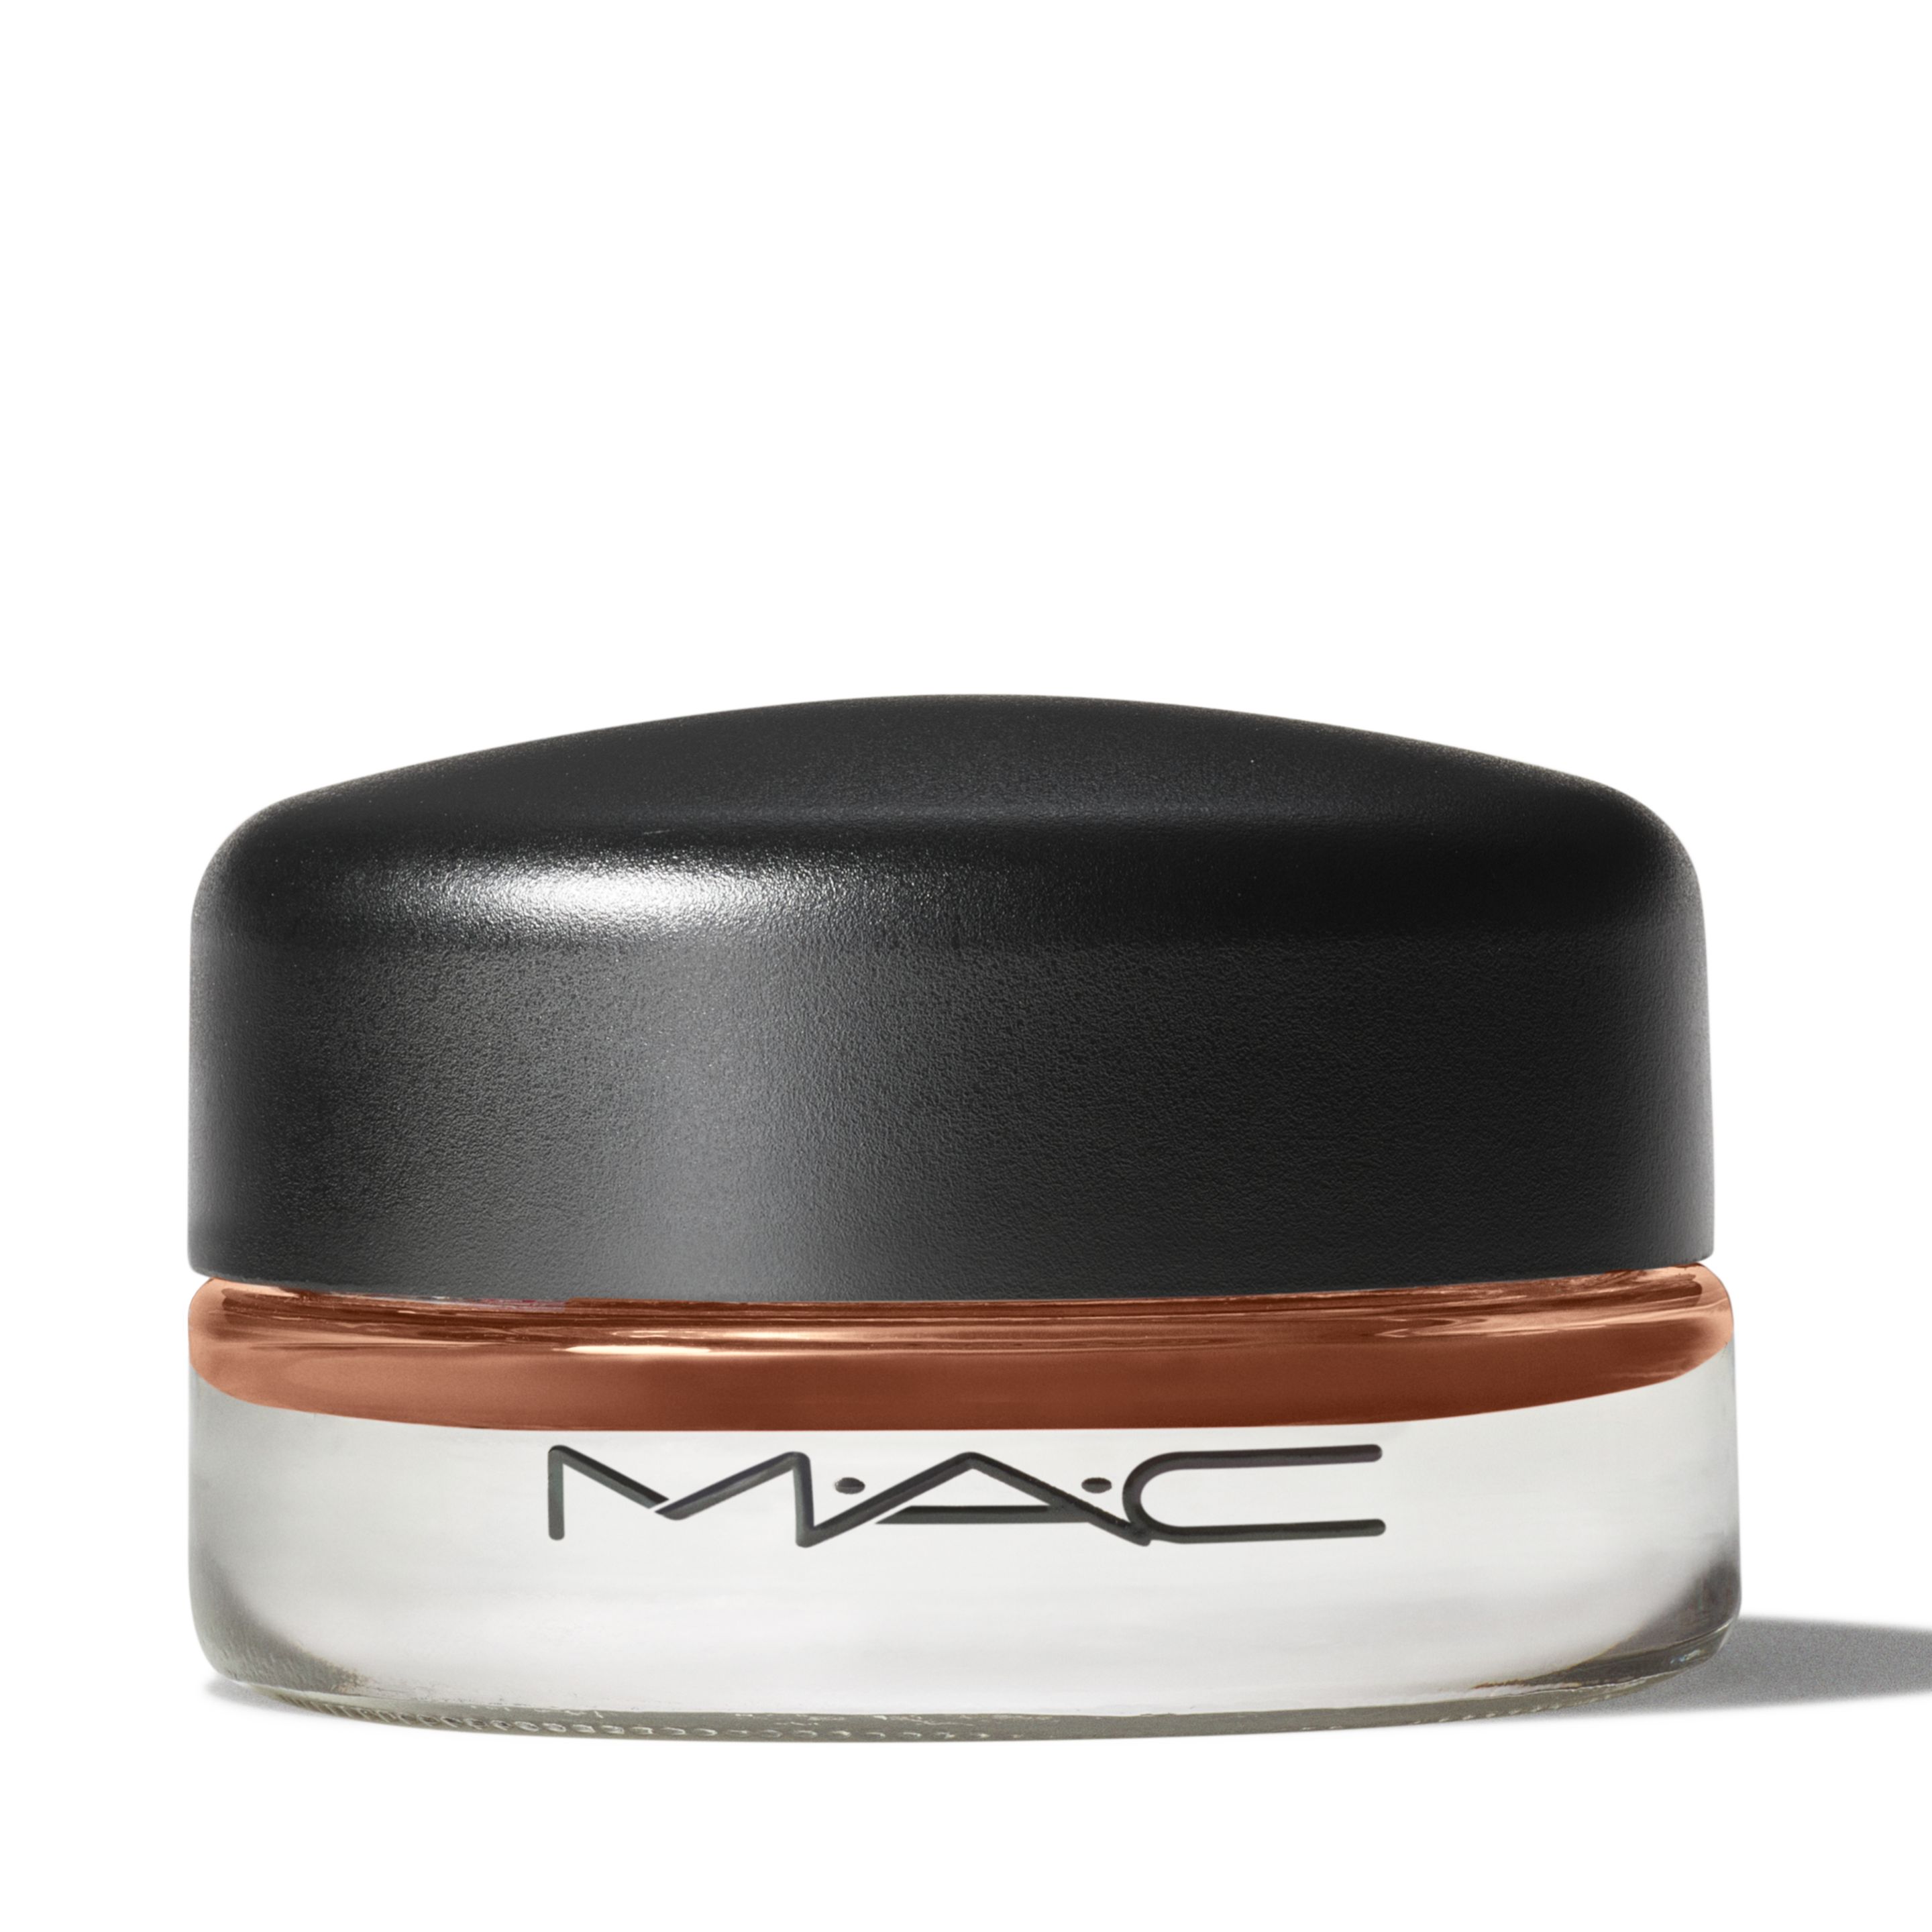 Тени для век MAC Pro Longwear Paint Pot кремовые, It's Fabstract, 5 г тени для век mac pro longwear paint pot кремовые sink to a whisper 5 г